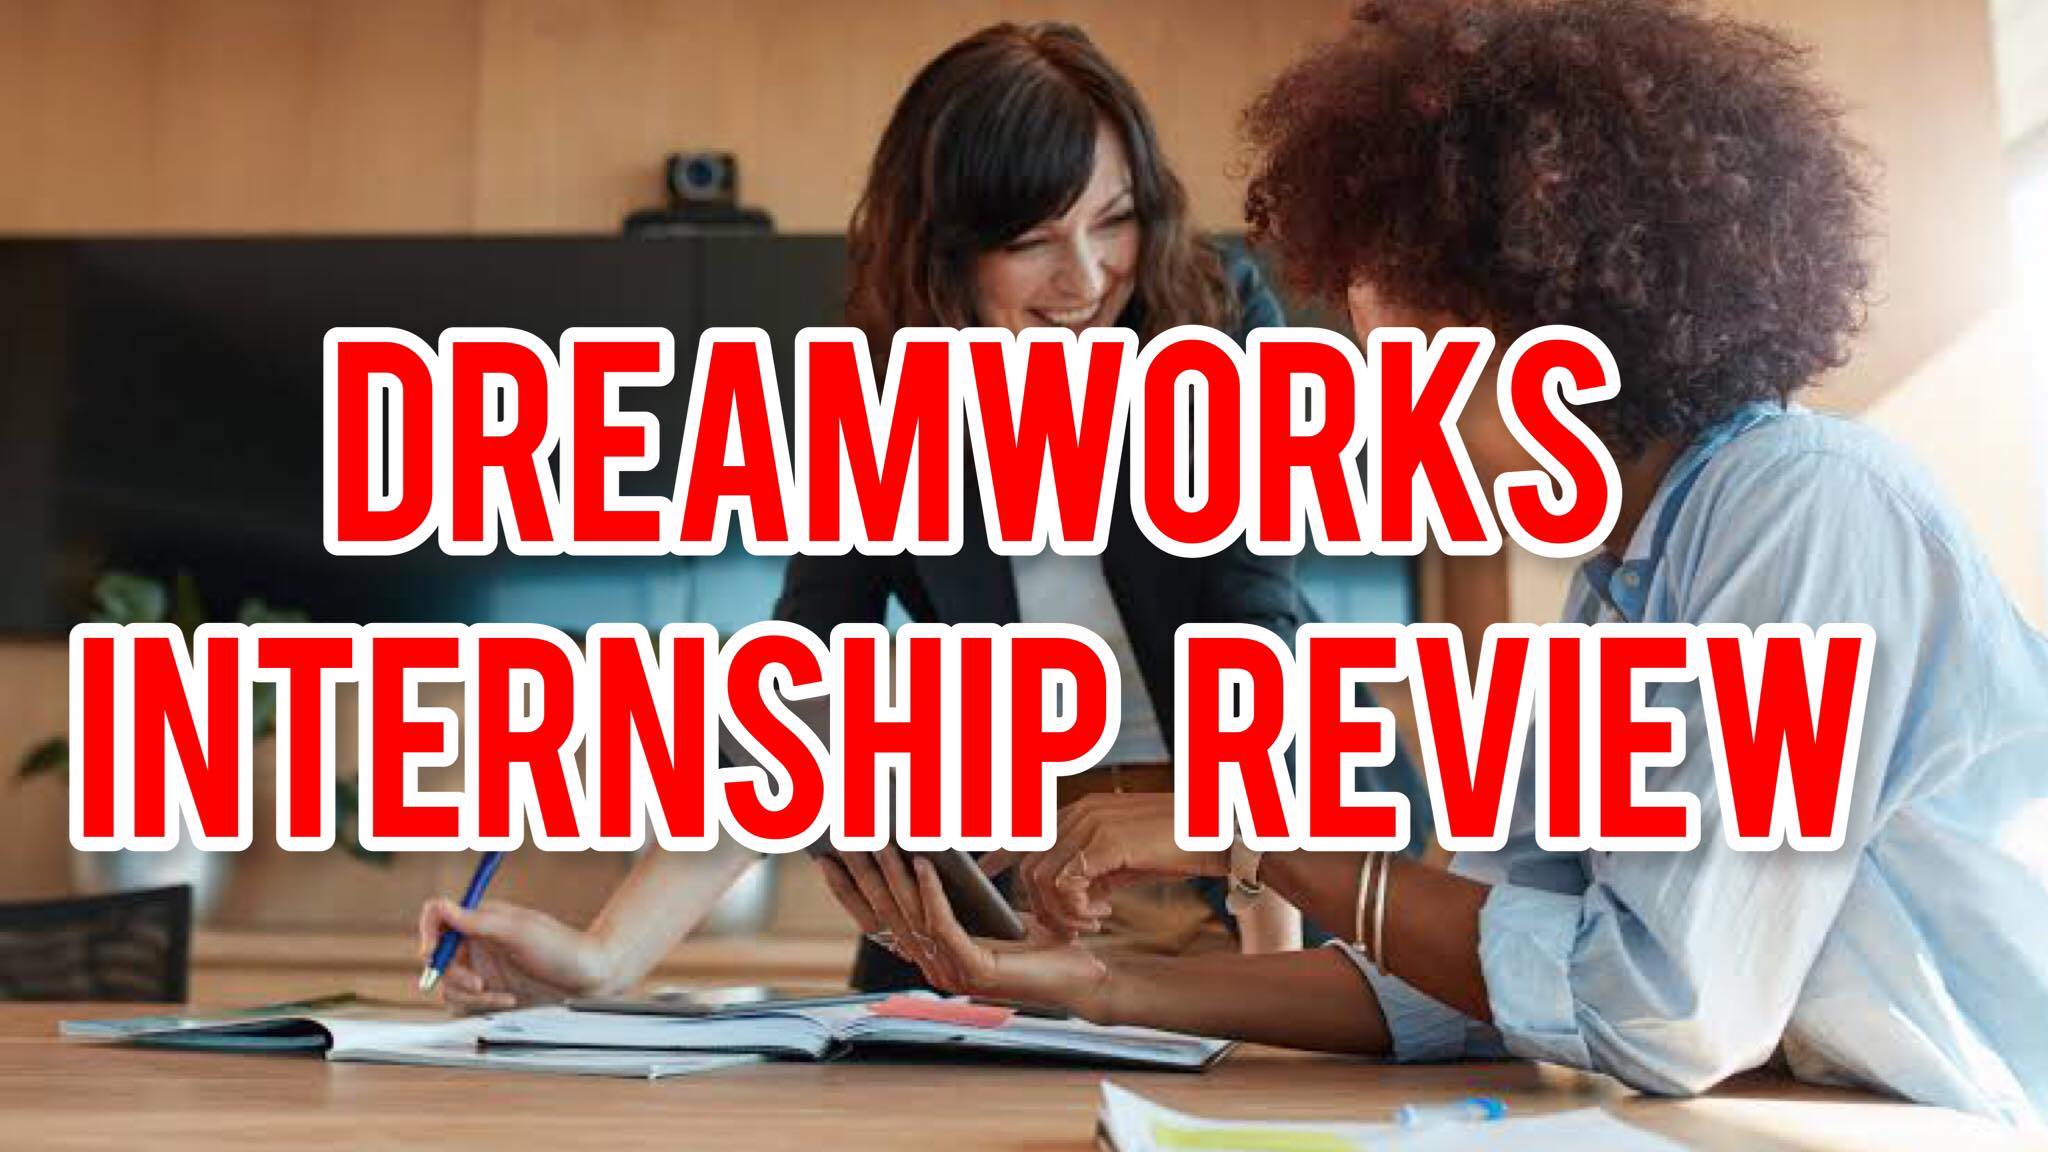 DreamWorks Internship Review